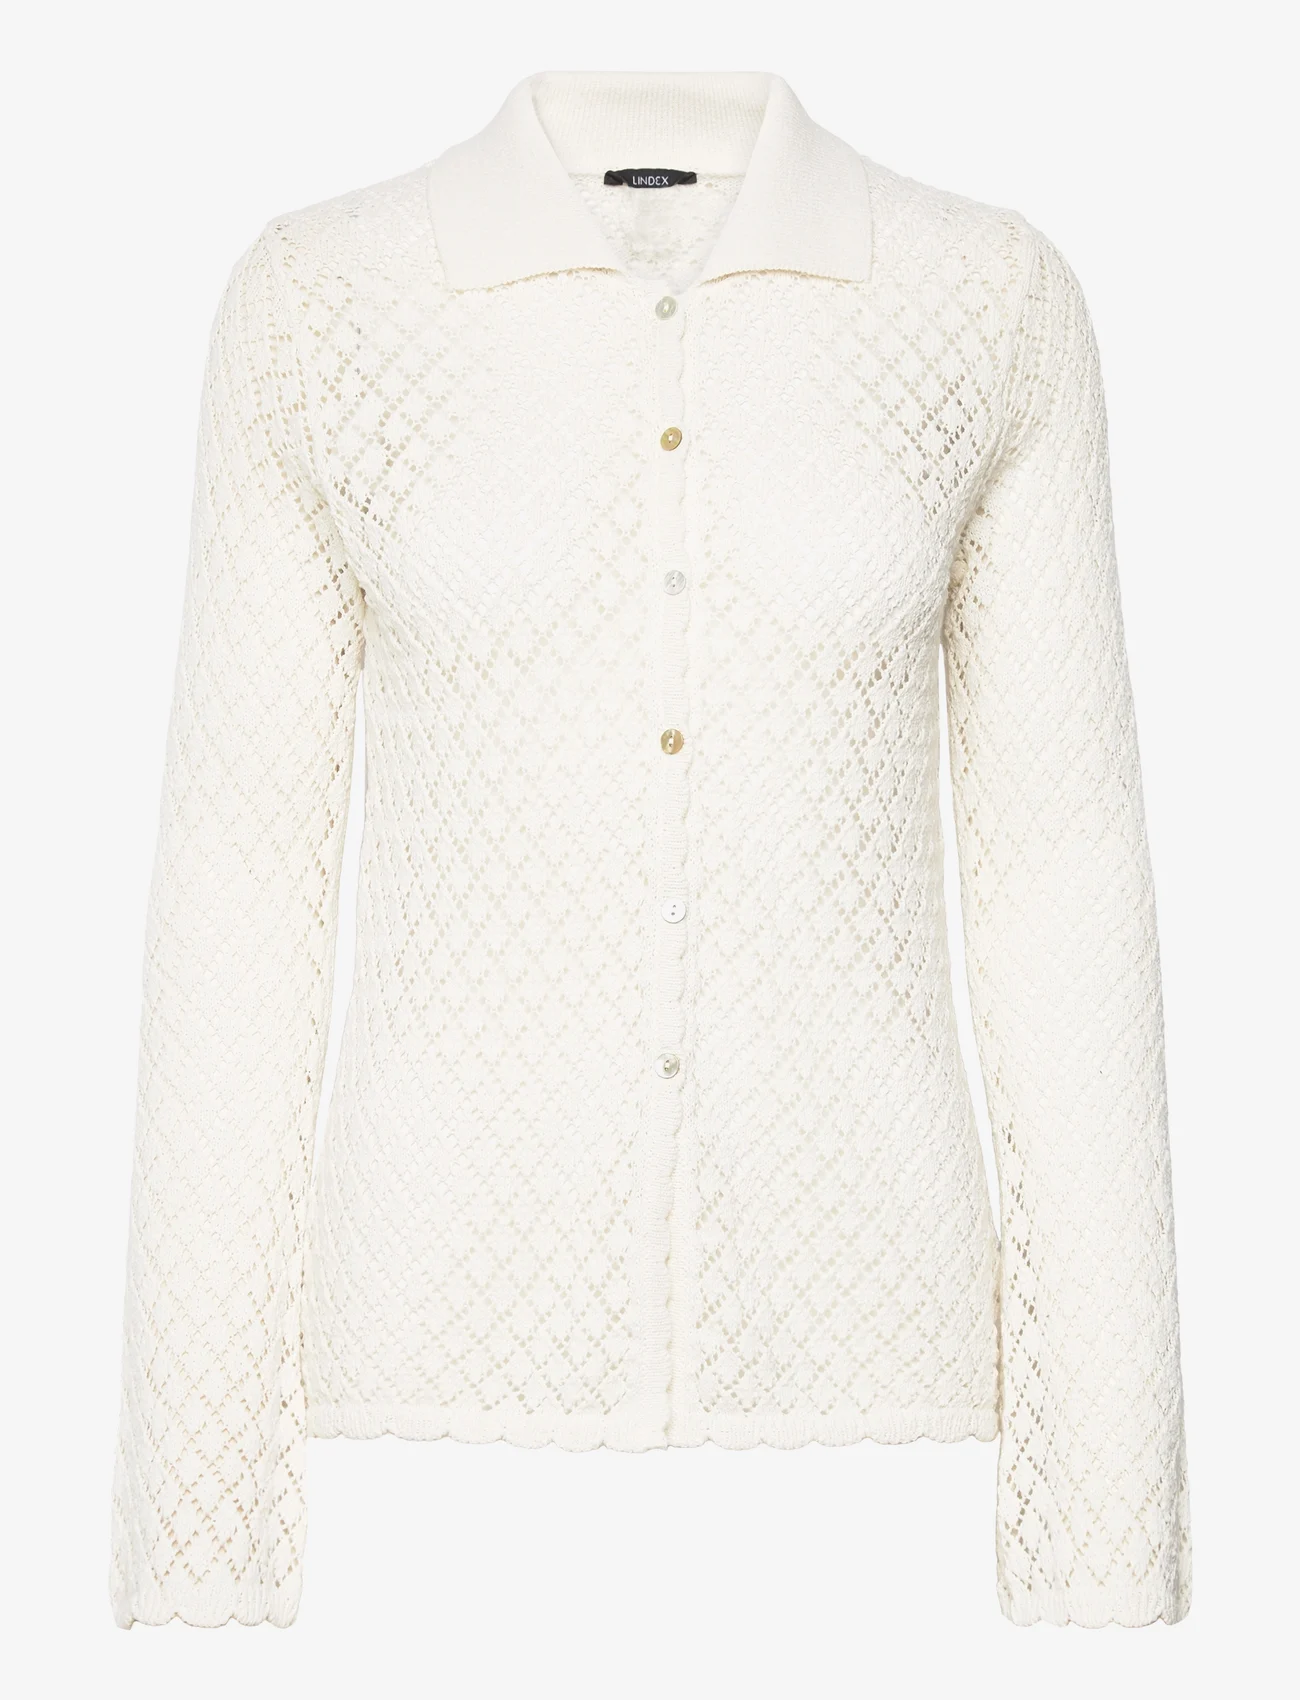 Lindex - Shirt knitted Pegha - långärmade skjortor - off white - 0